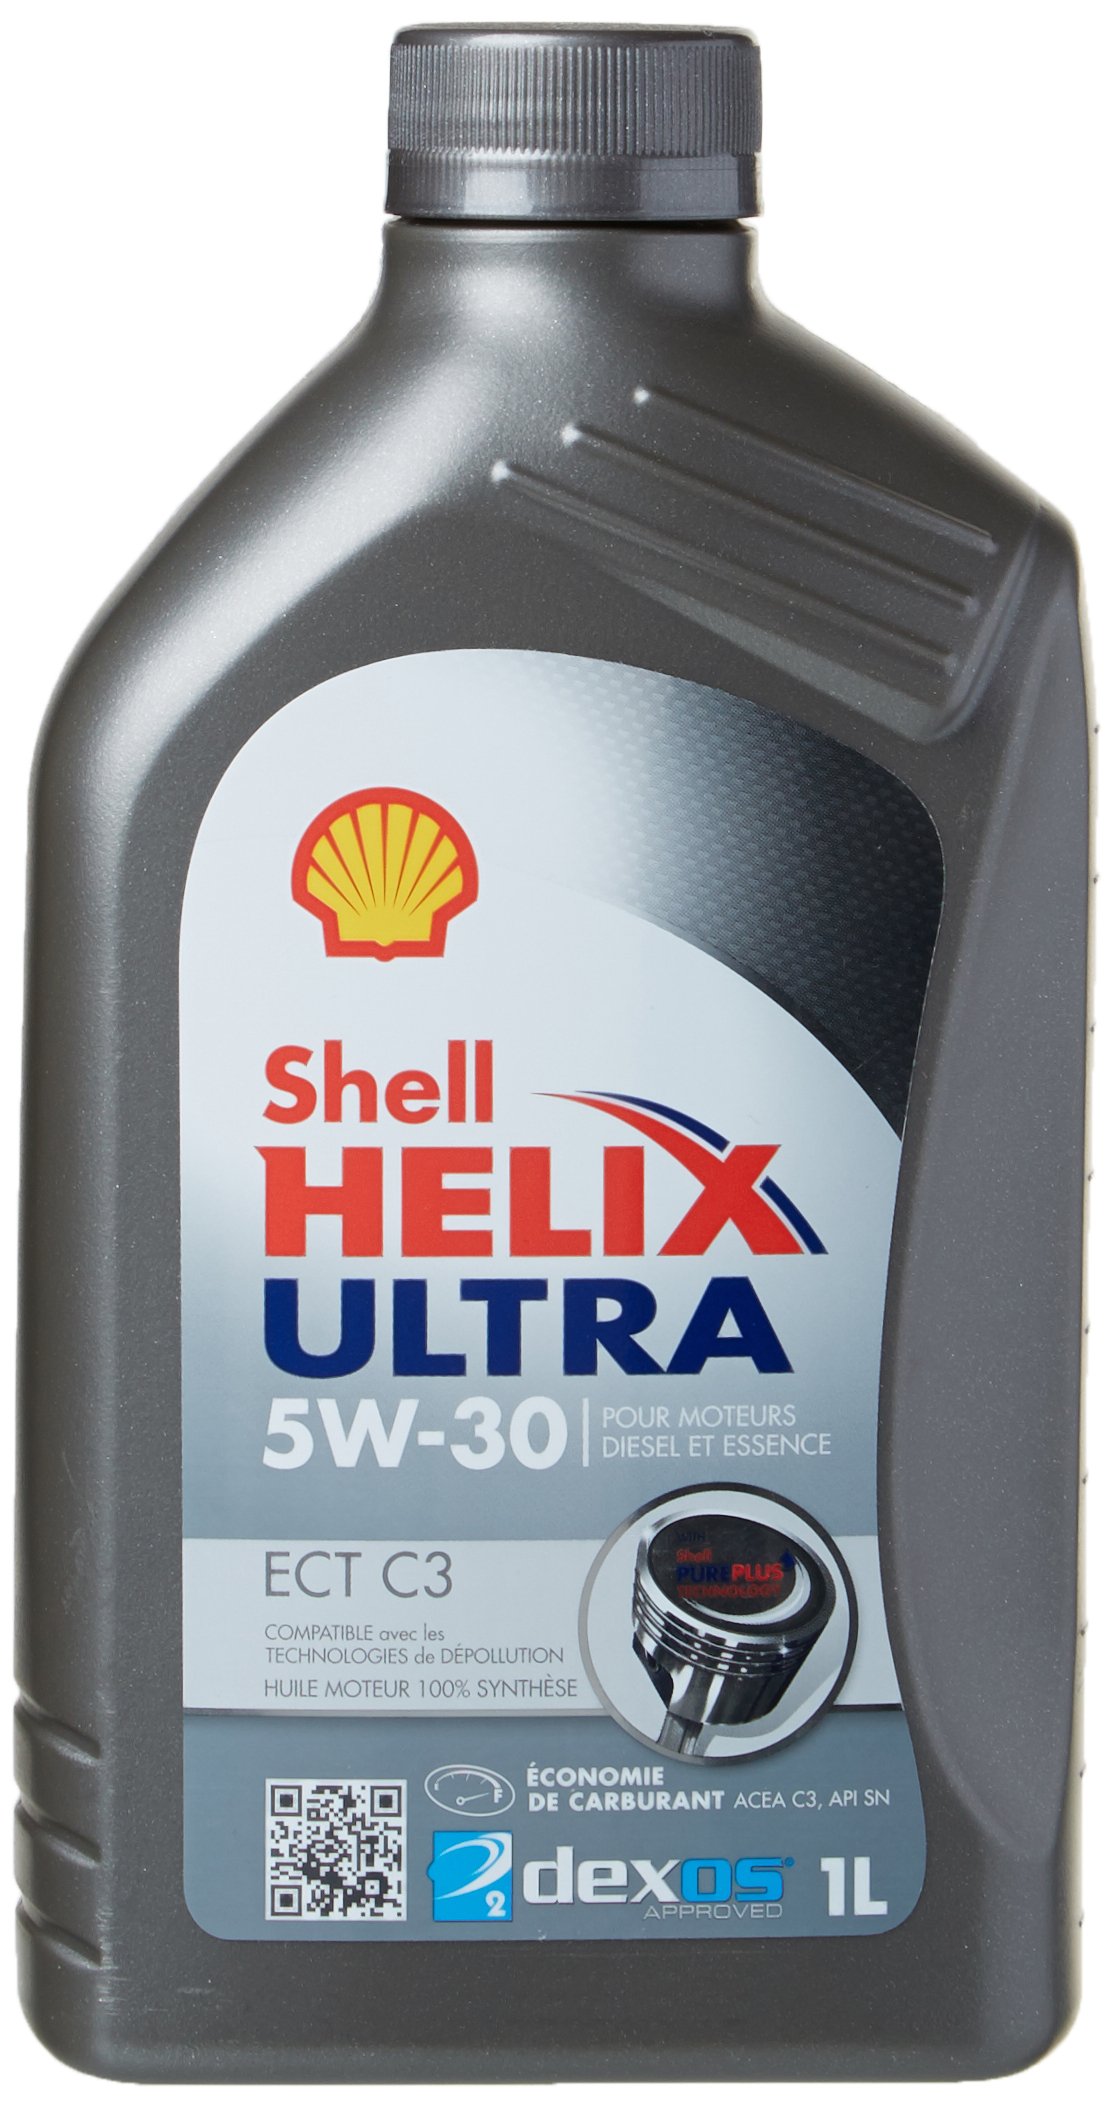 Shell HELIX ULTRA ECT C3 Motorenöl, 1L von Shell